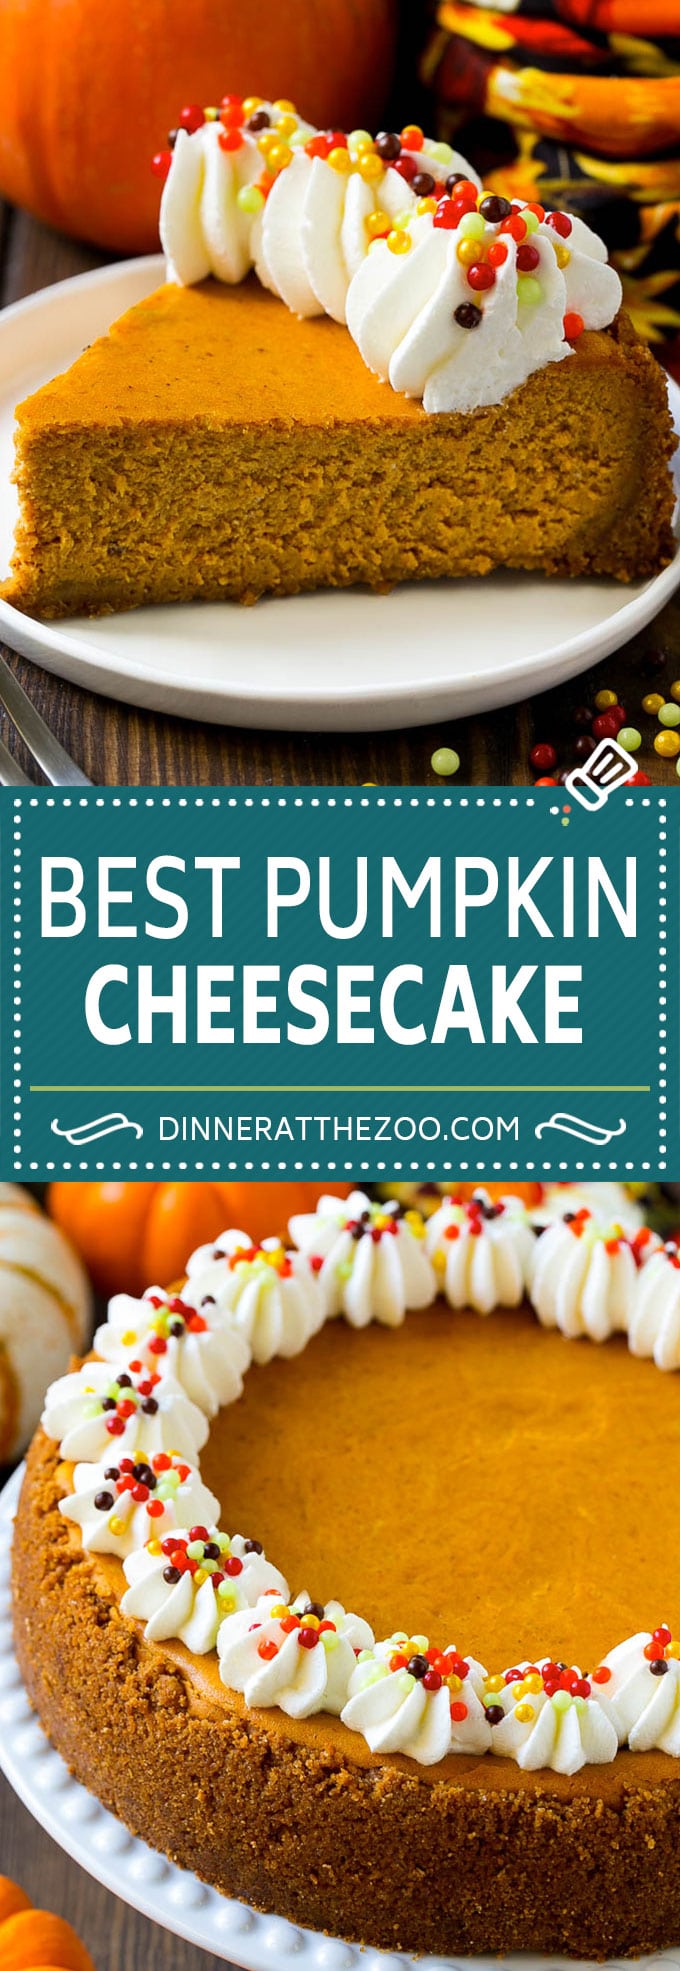 Pumpkin Cheesecake Recipe | Pumpkin Pie Cheesecake | Pumpkin Dessert #pumpkin #thanksgiving #dessert #cheesecake #fall #dinneratthezoo